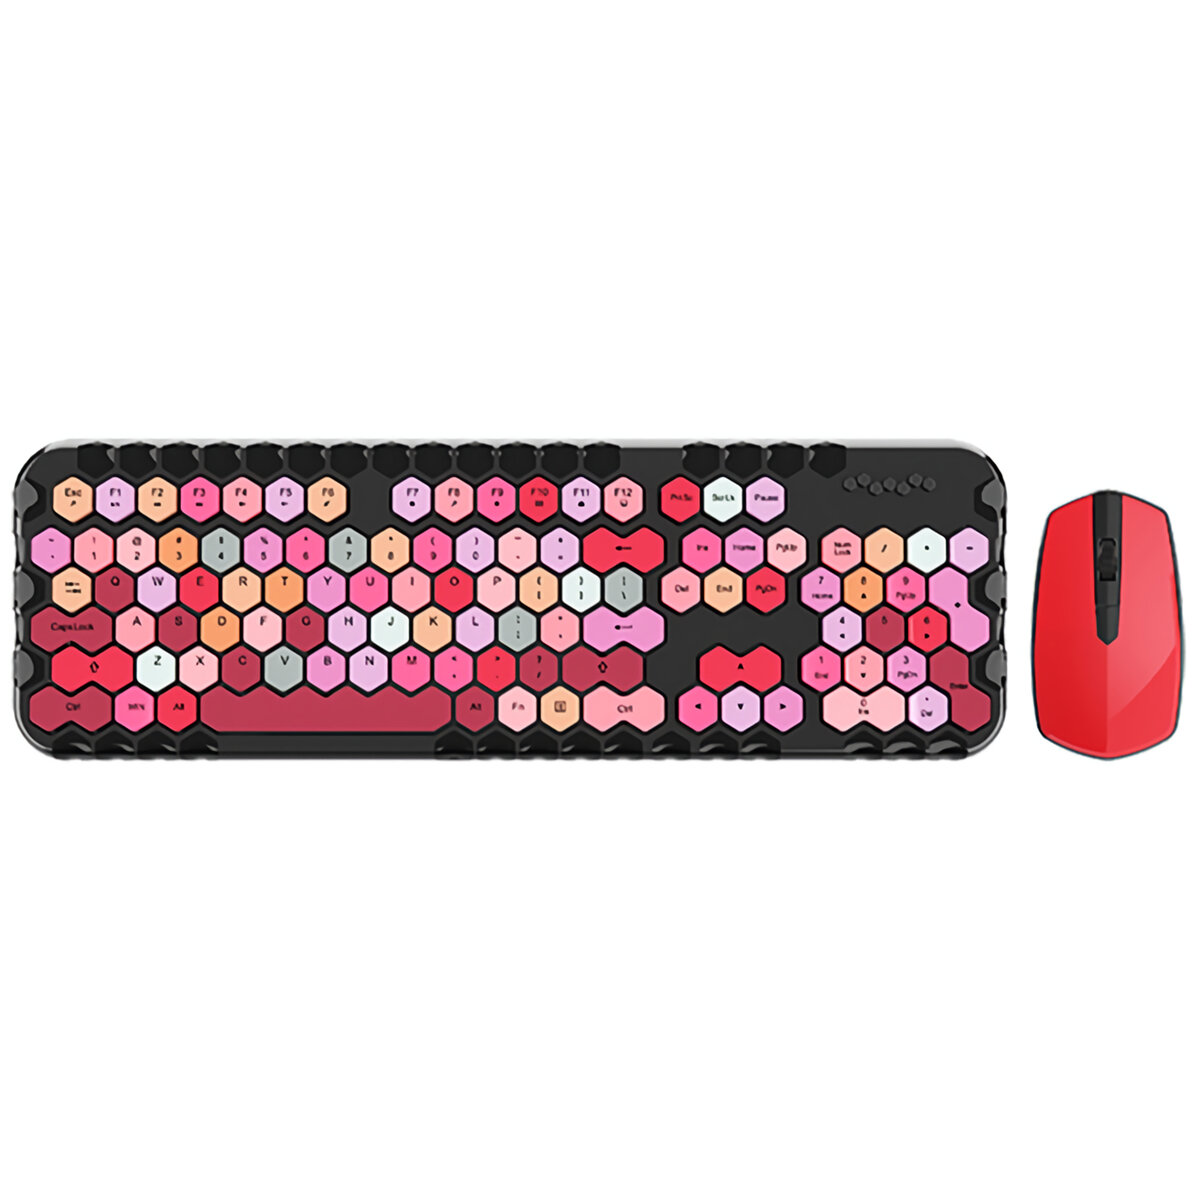 Mofii Honey Plus 2.4G Wireless Keyboard & Mouse Set 104 Keys Honeycomb Keycaps Keyboard Office Mouse